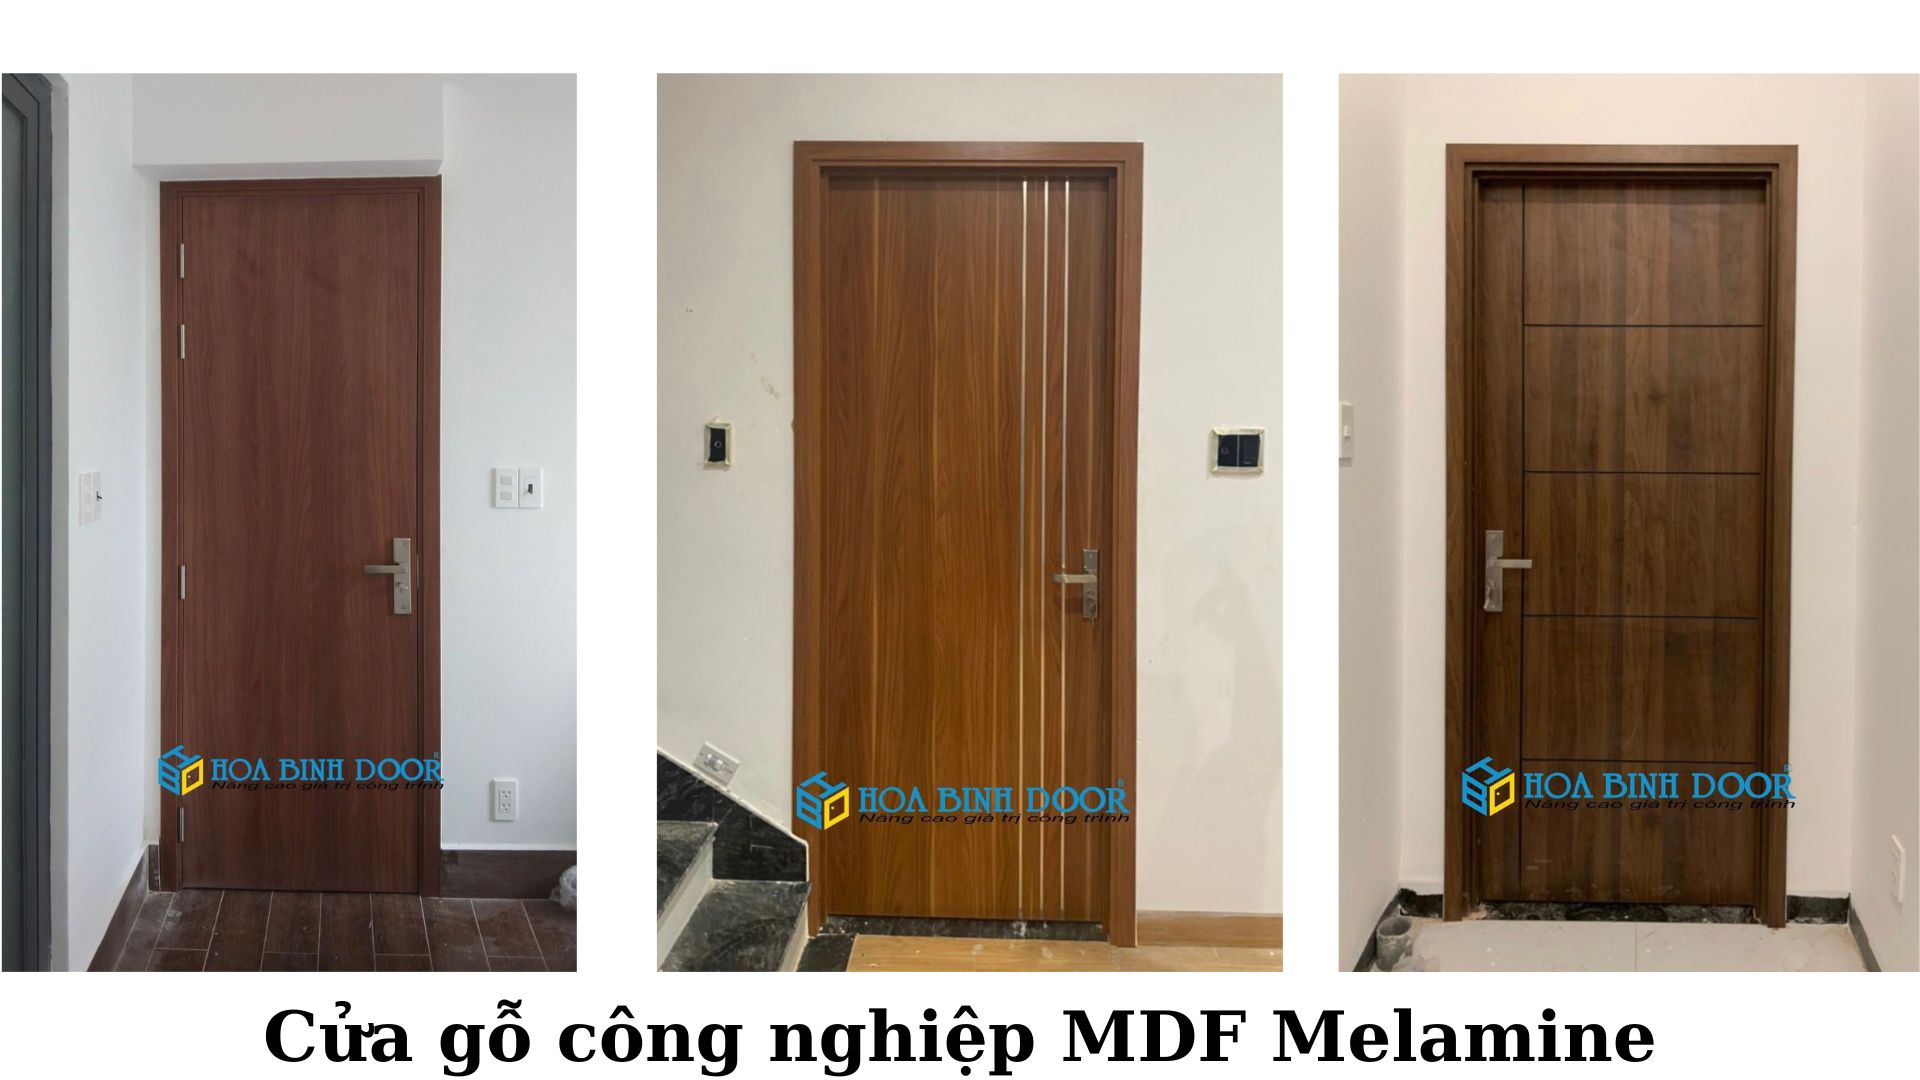 Cua-go-cong-nghiep-MDF-Melamine-5.jpg